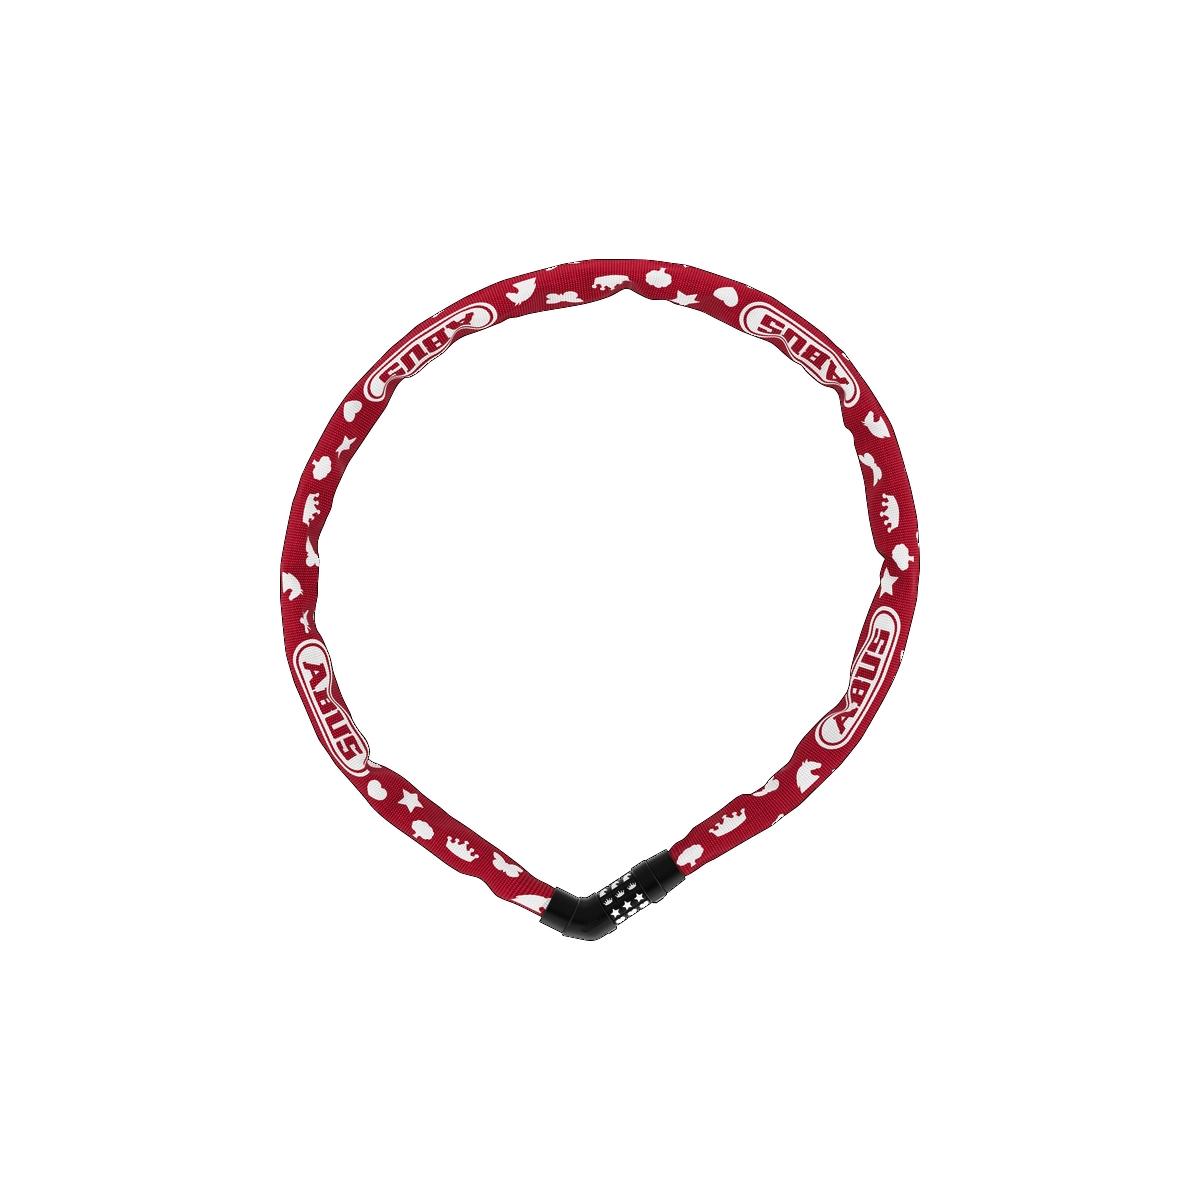 Łańcuch ABUS Steel-O-Chain 4804C - red symbols